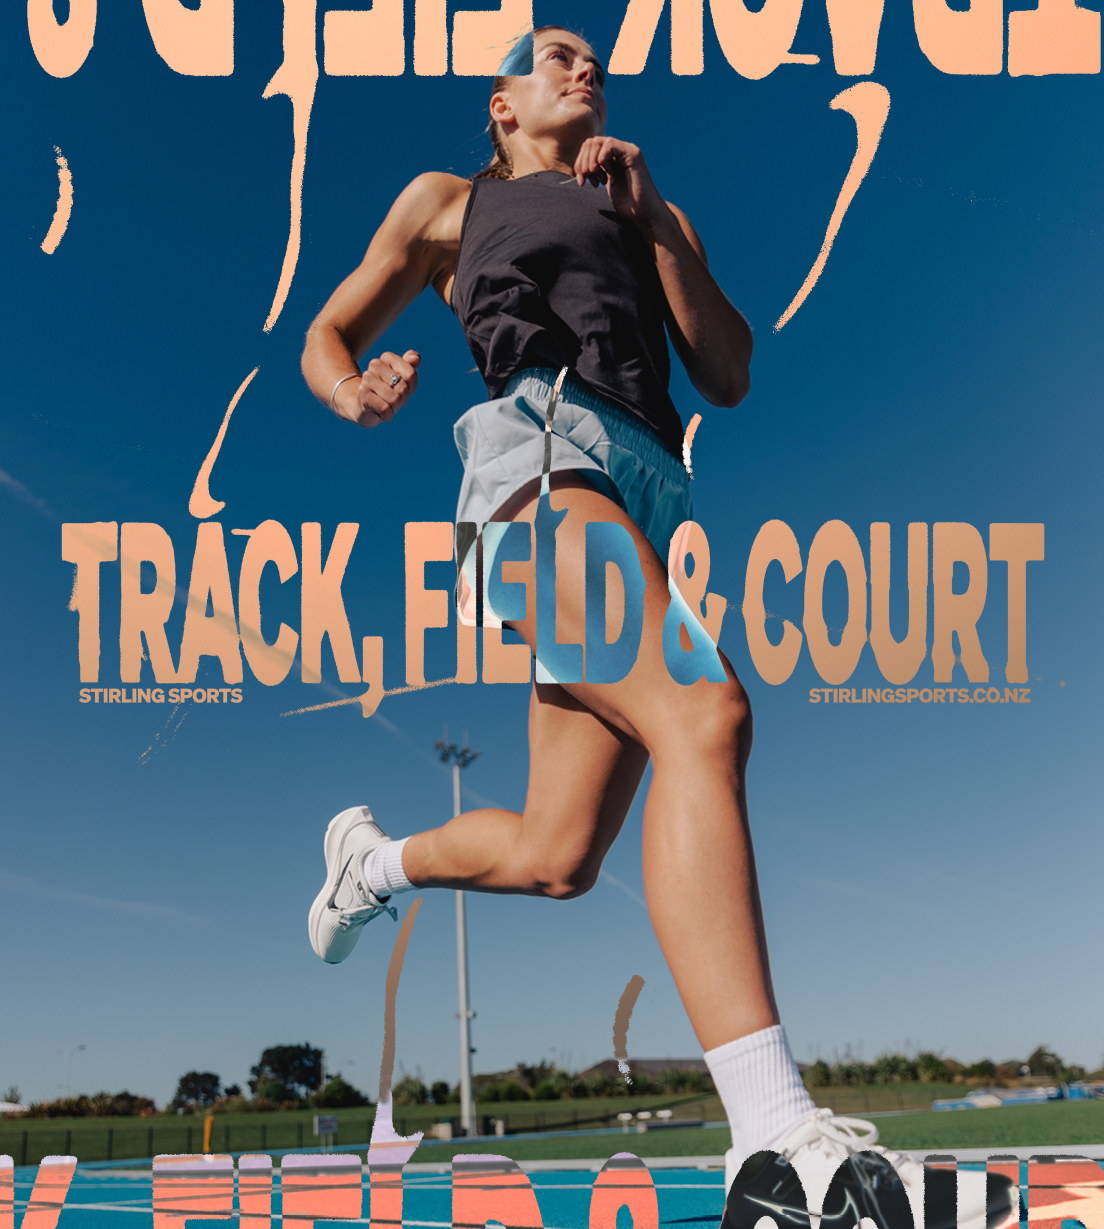 Track, Field & Court